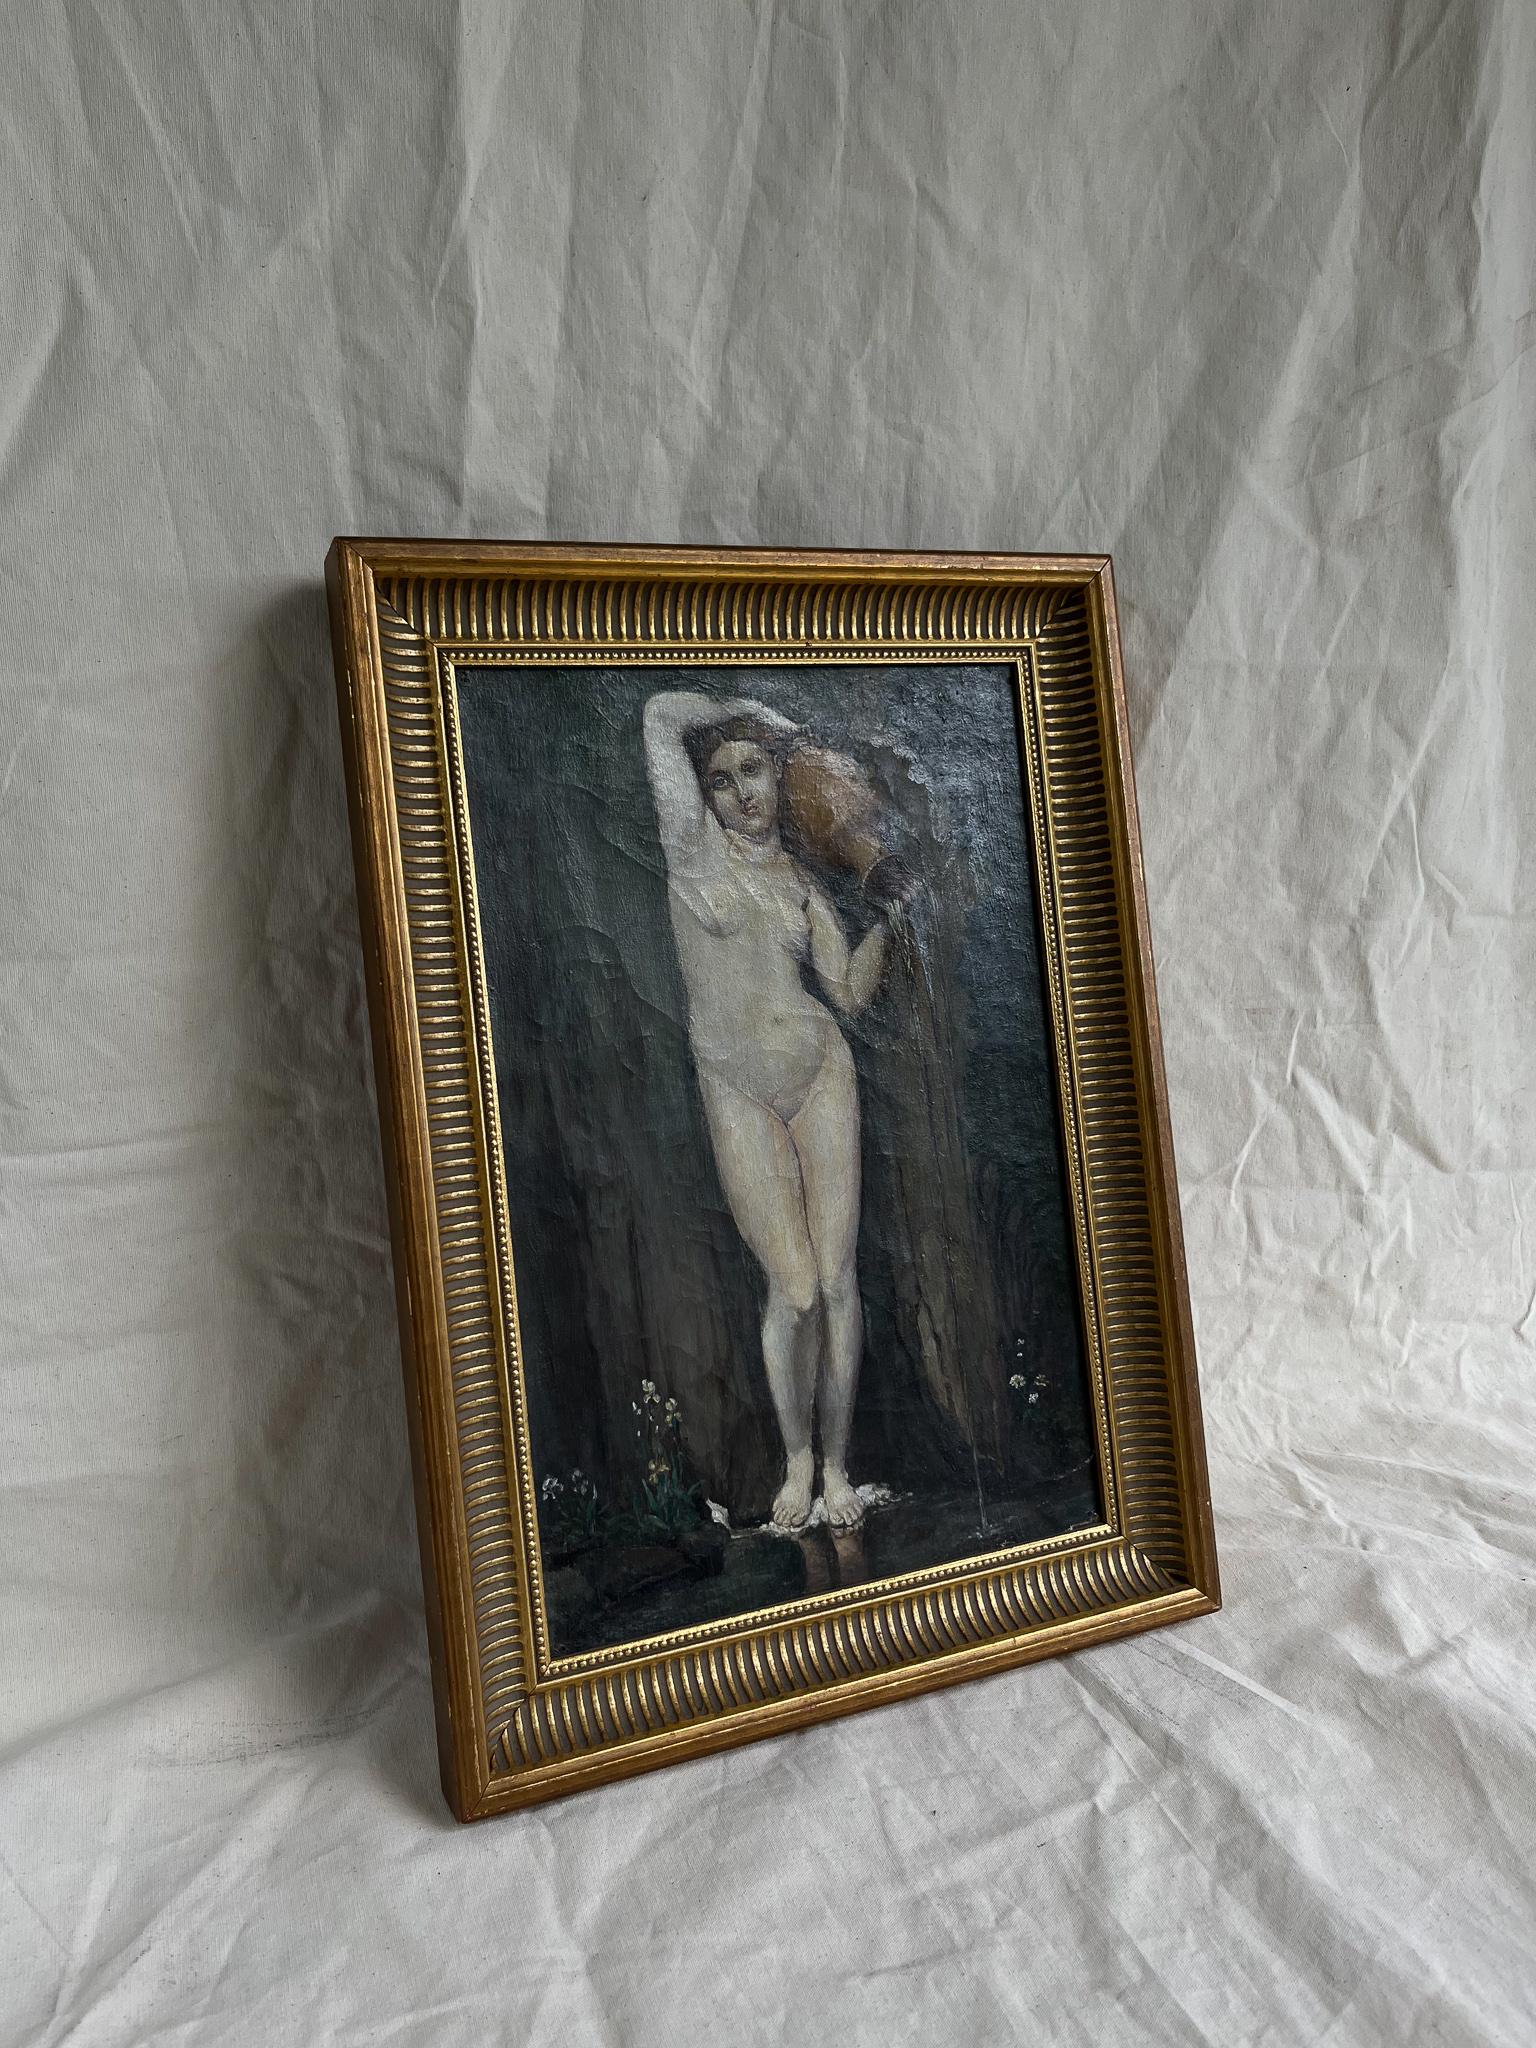 Femme au Jarre, Öl auf Leinwand.
20. Jahrhundert.